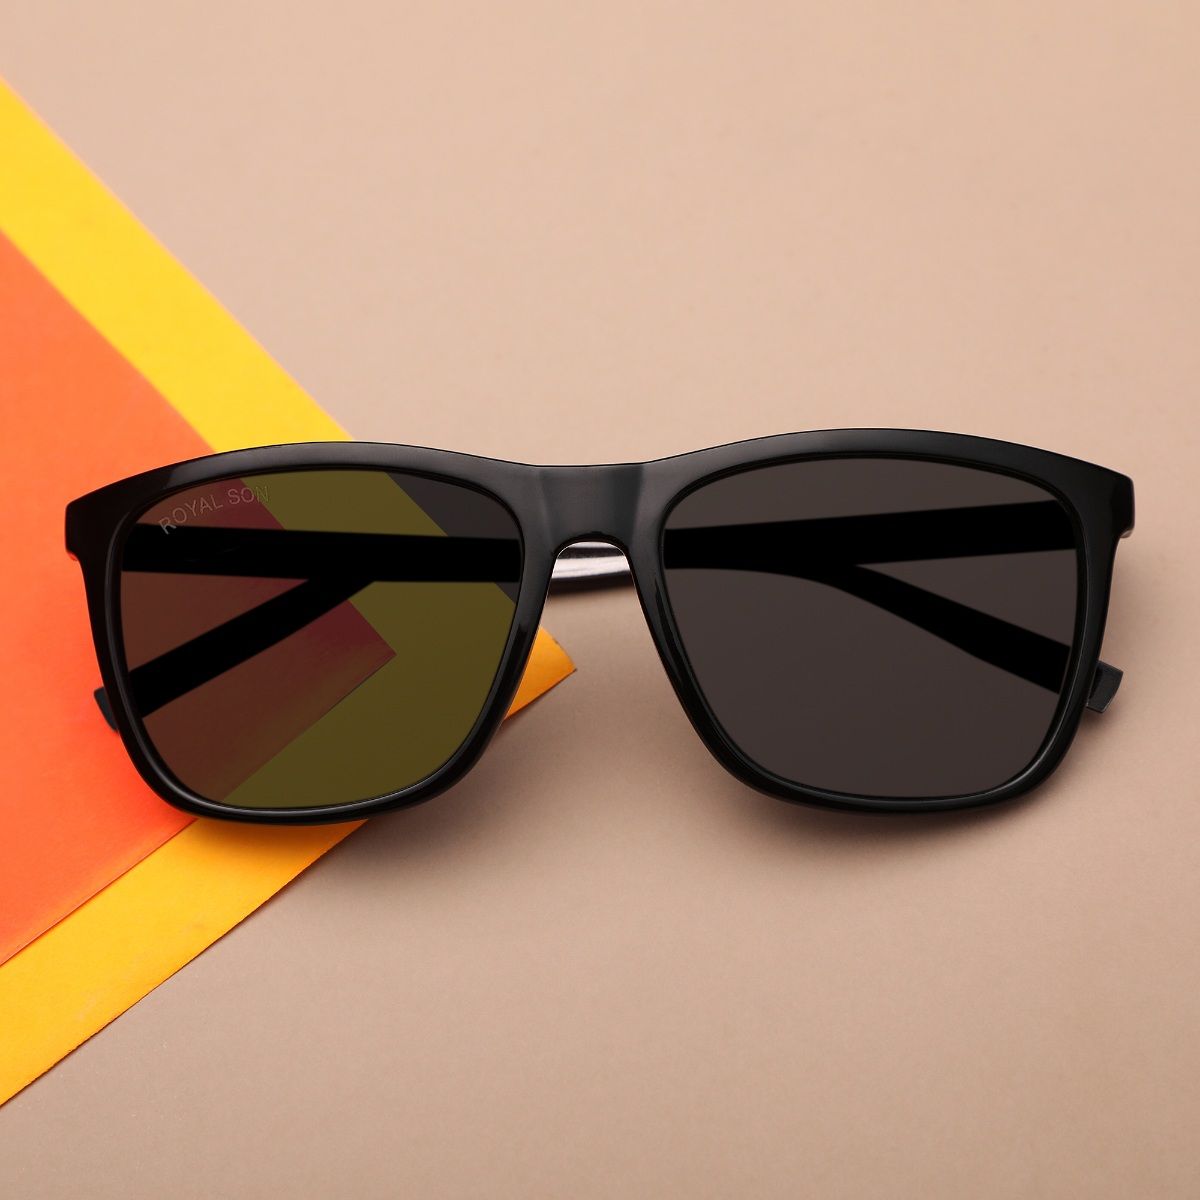 Buy Eymen I Retro Square Sunglasses for Women Men - Trendy Pilot Driving  Sun Glasses Vintage 70s Glasses UV 400 Protection at Amazon.in